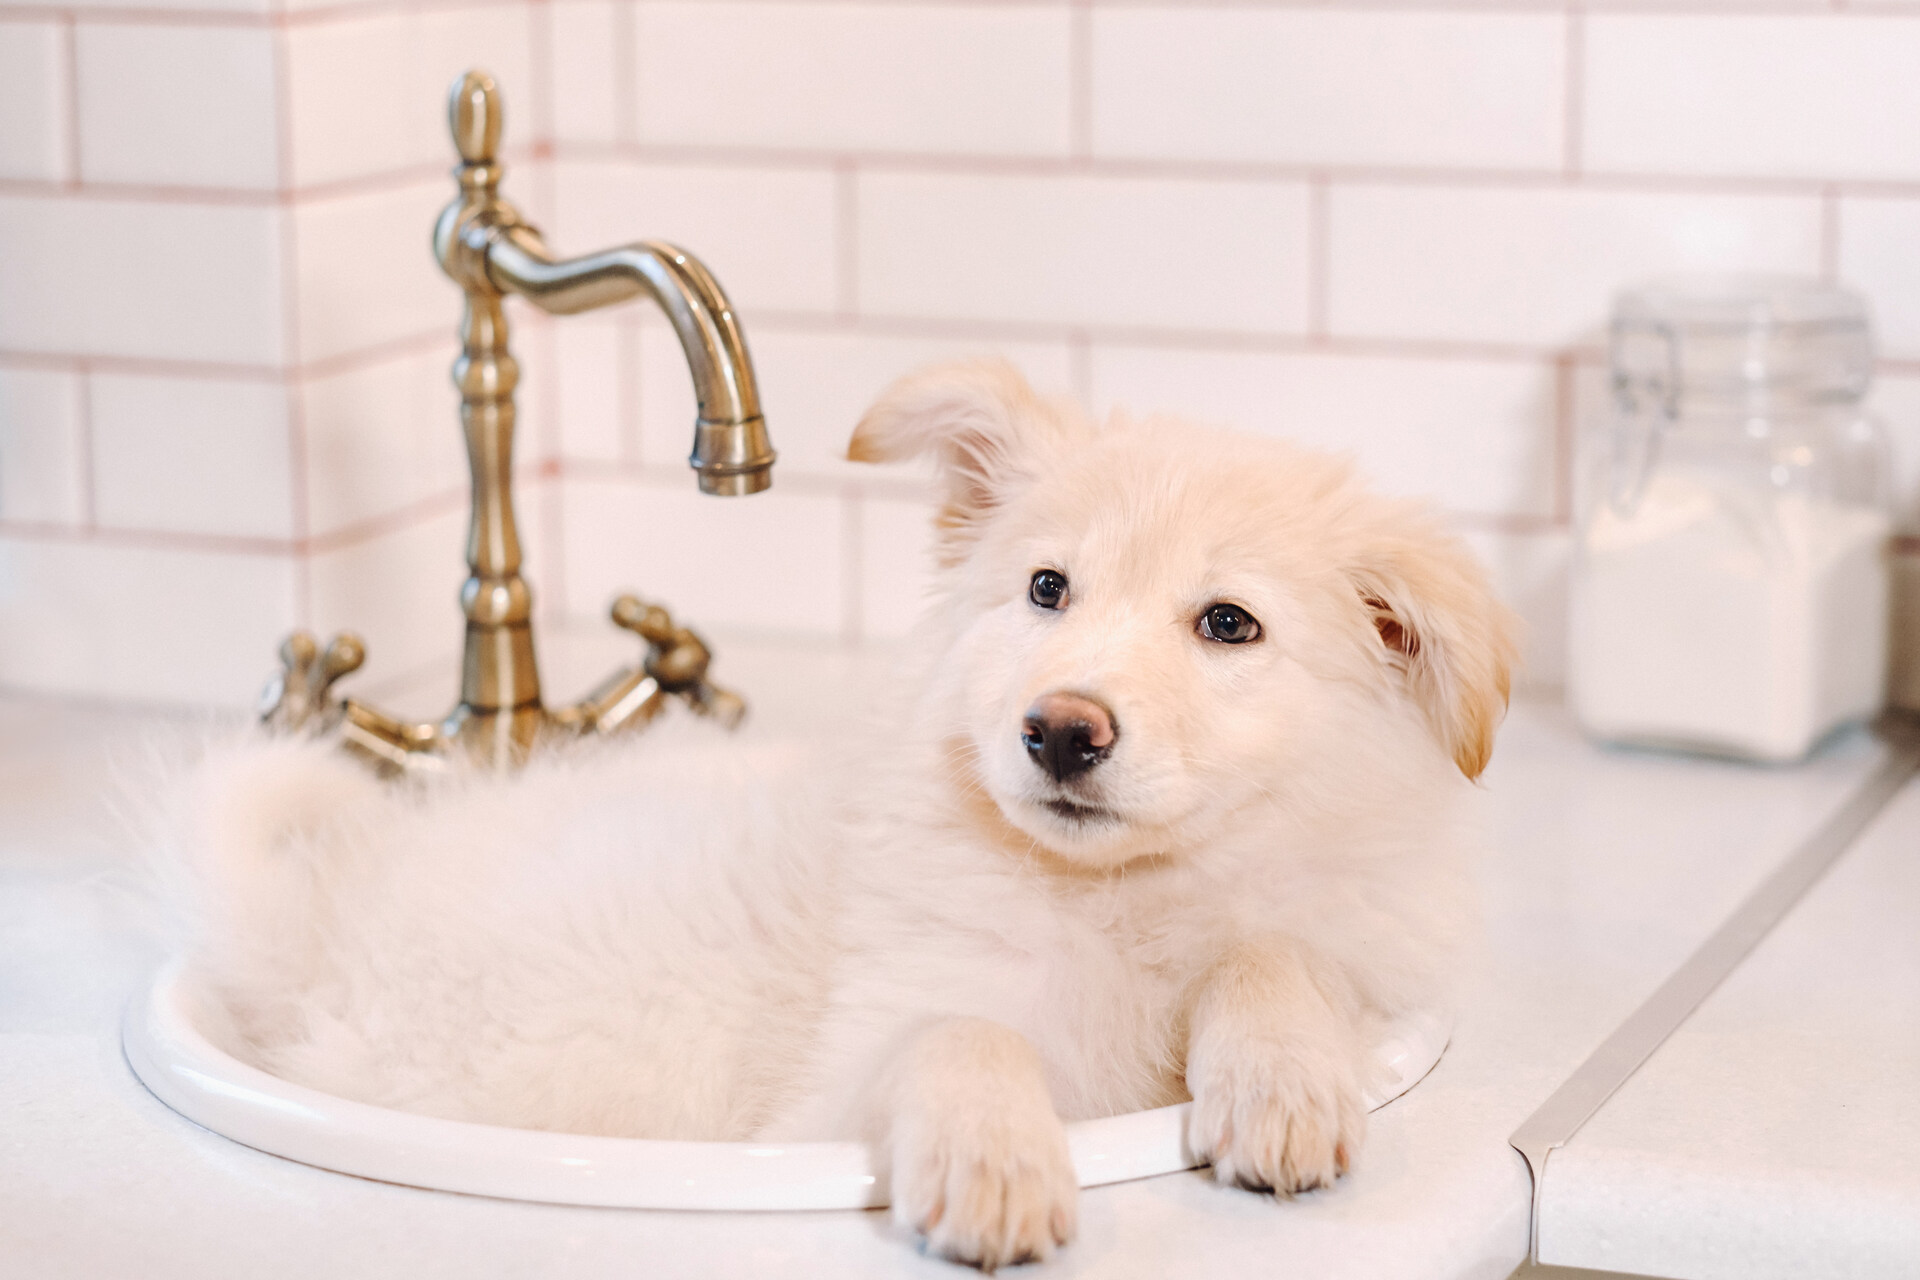 A white puppy sitting in a bathroom sink